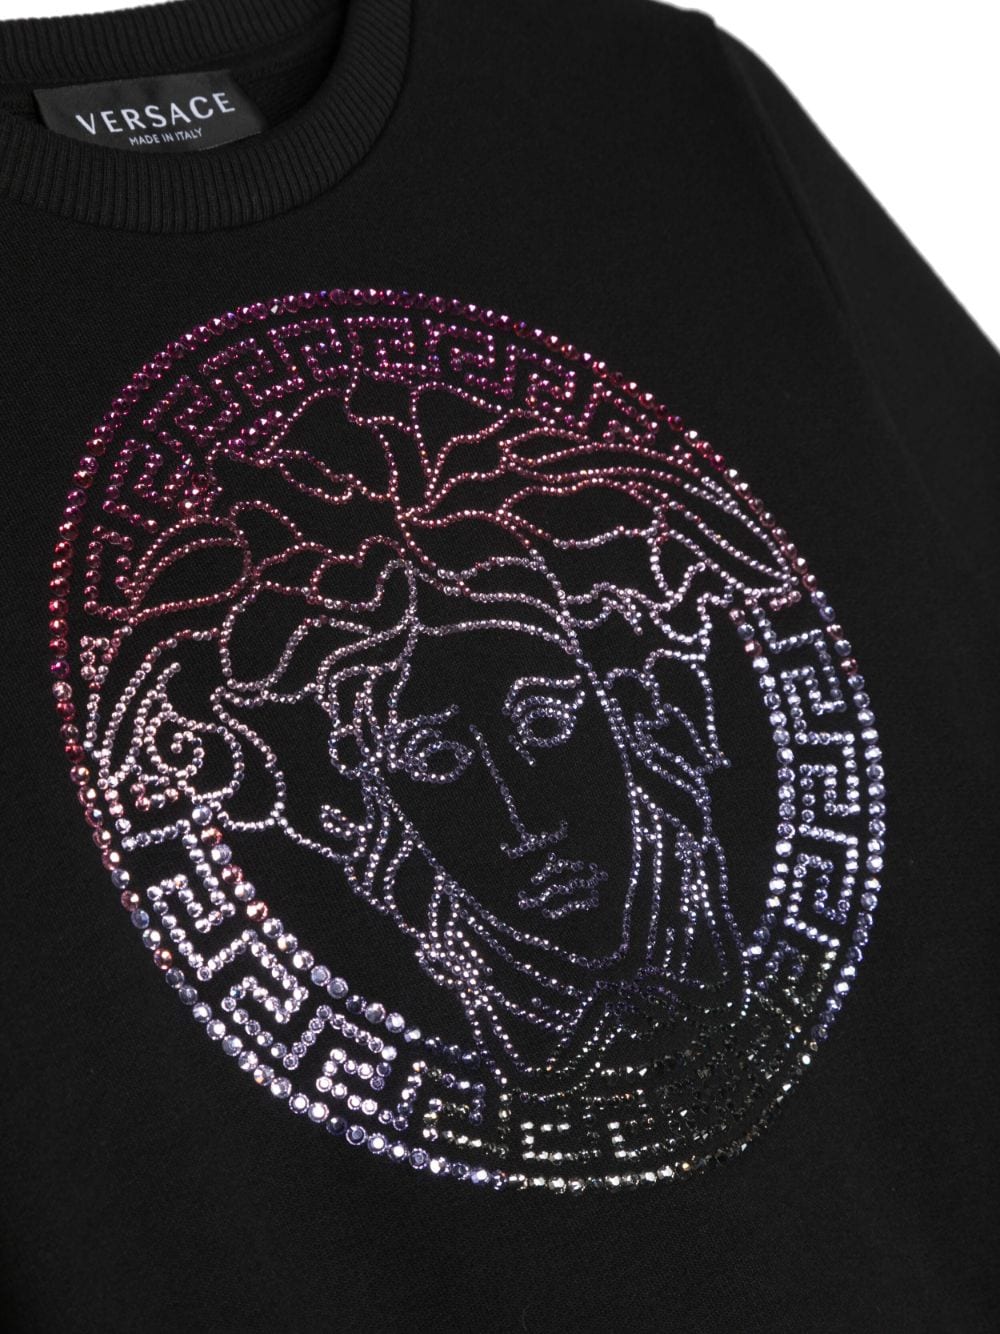 Versace Kids sweatshirt with Medusa